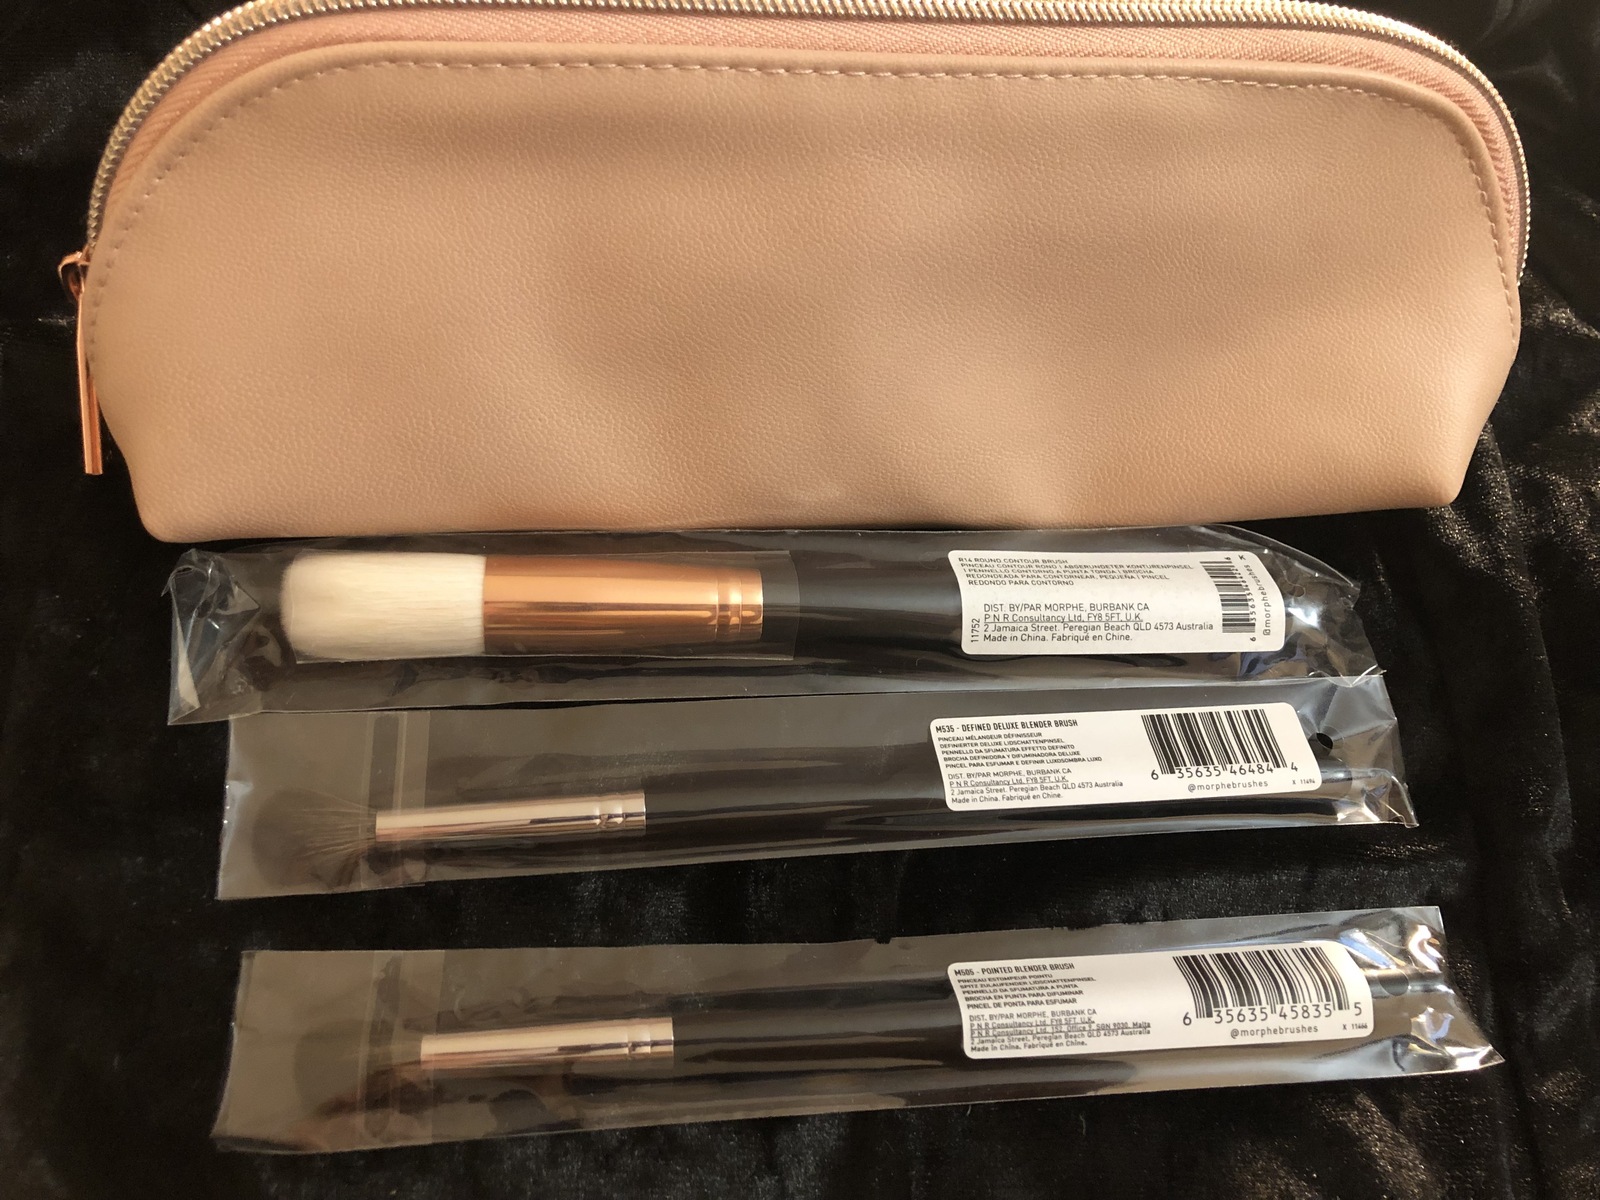 Morphe Makeup Brush Set With Bag - $24.95